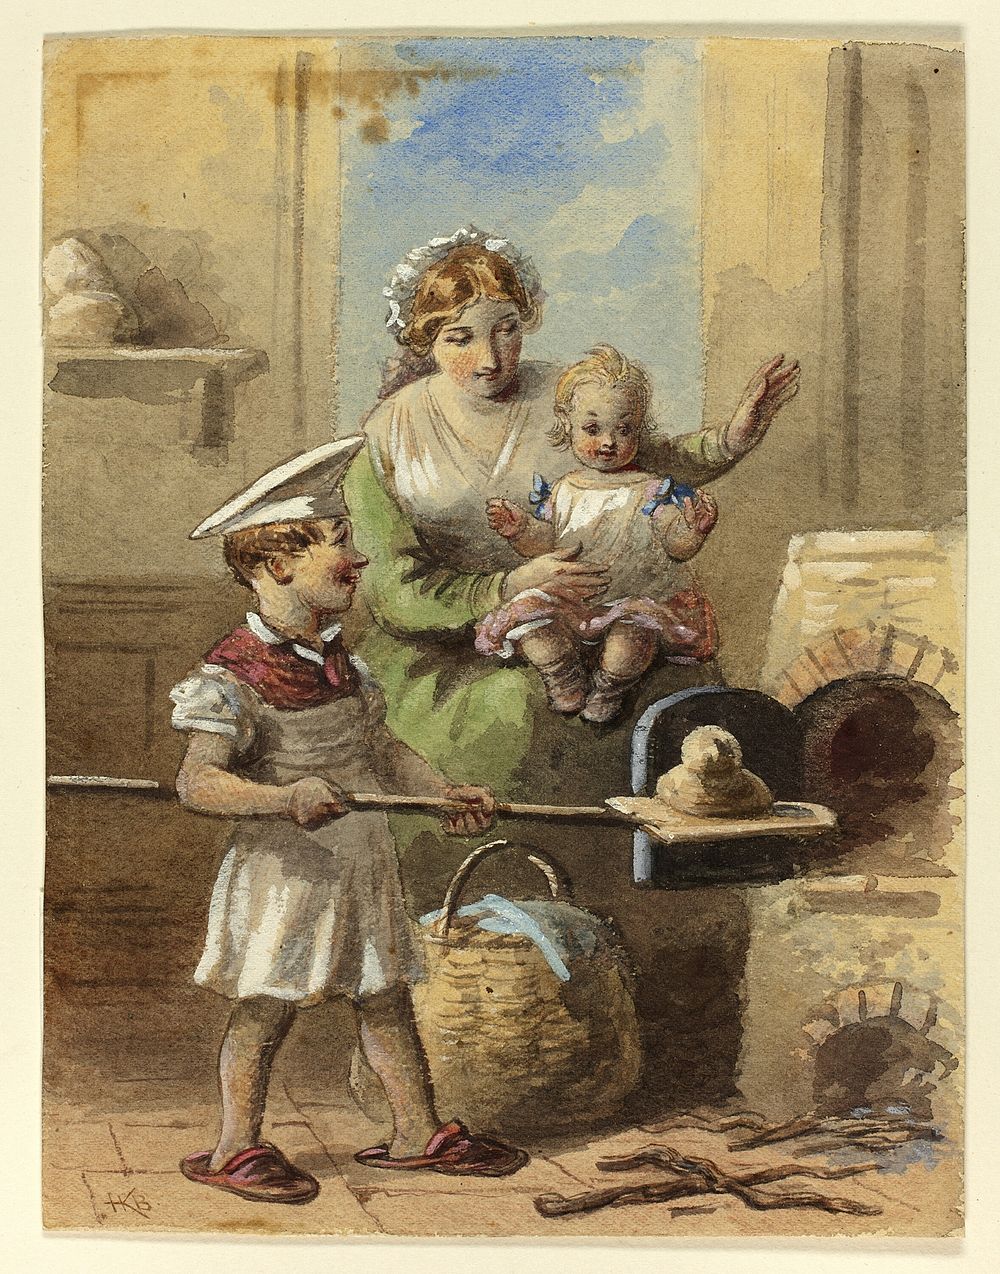 Boy Baking Bread by Hablot Knight Browne